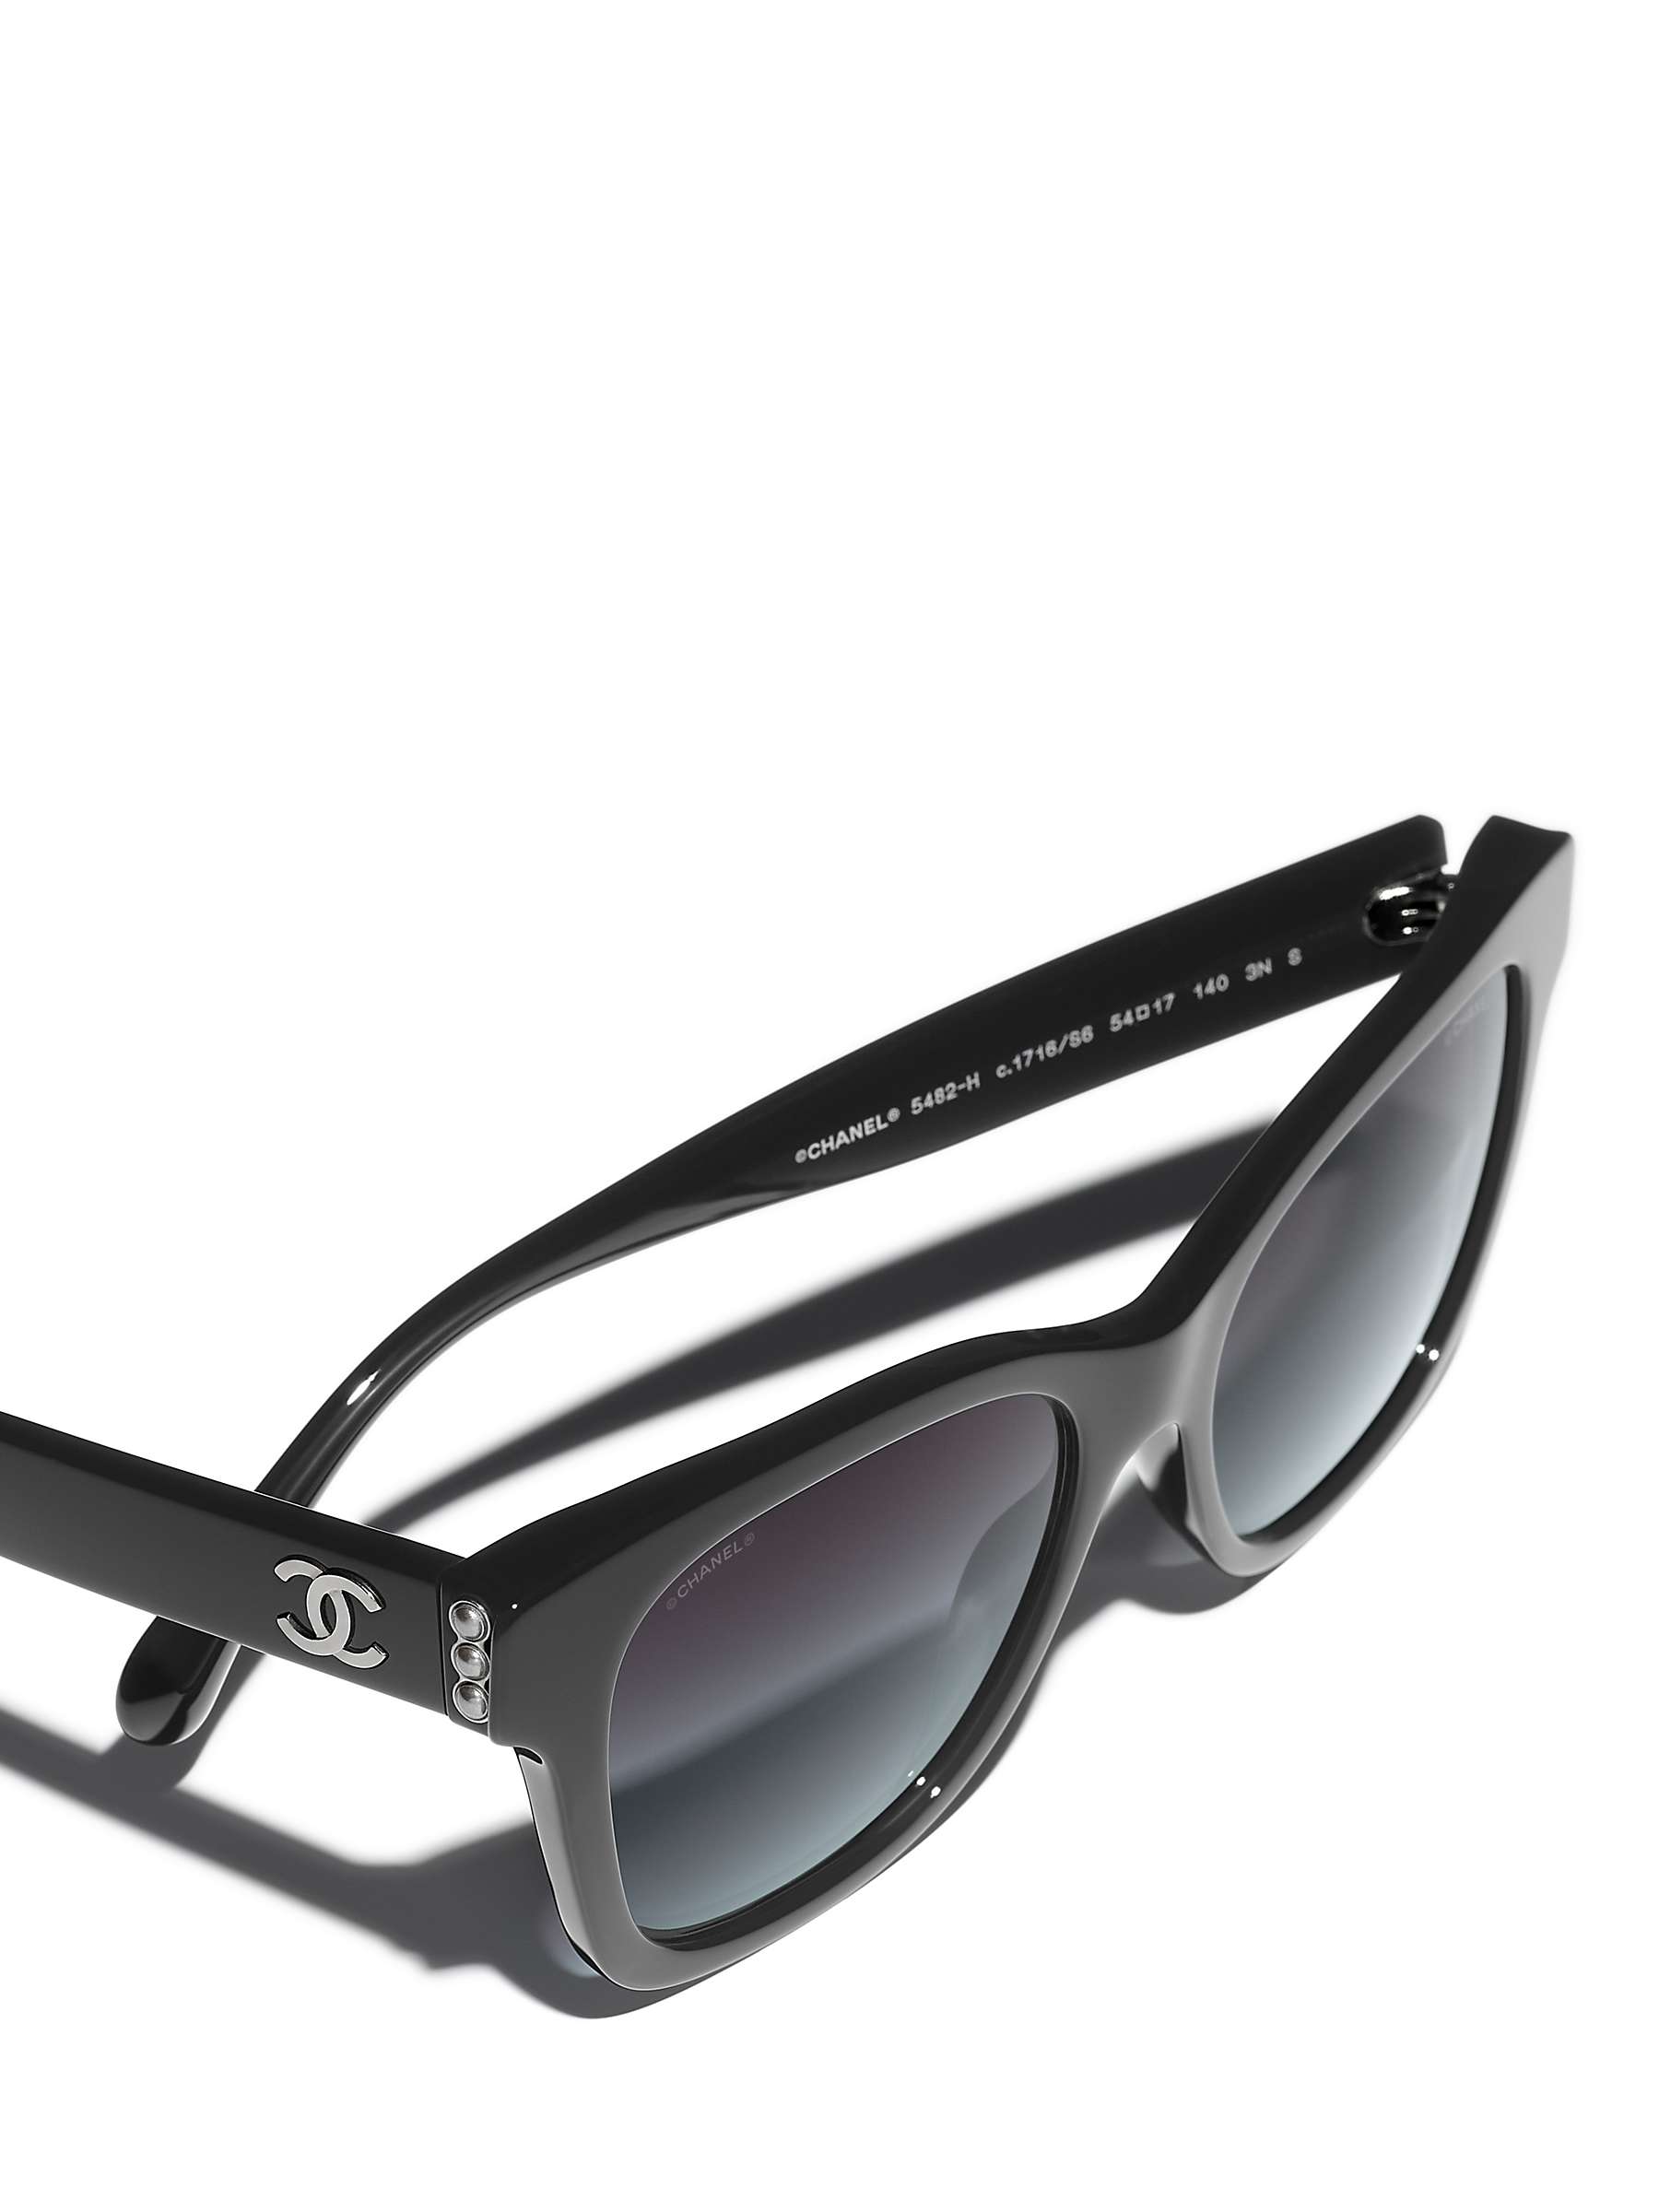 Buy CHANEL Rectangular Sunglasses CH5482H Black/Blue Gradient Online at johnlewis.com